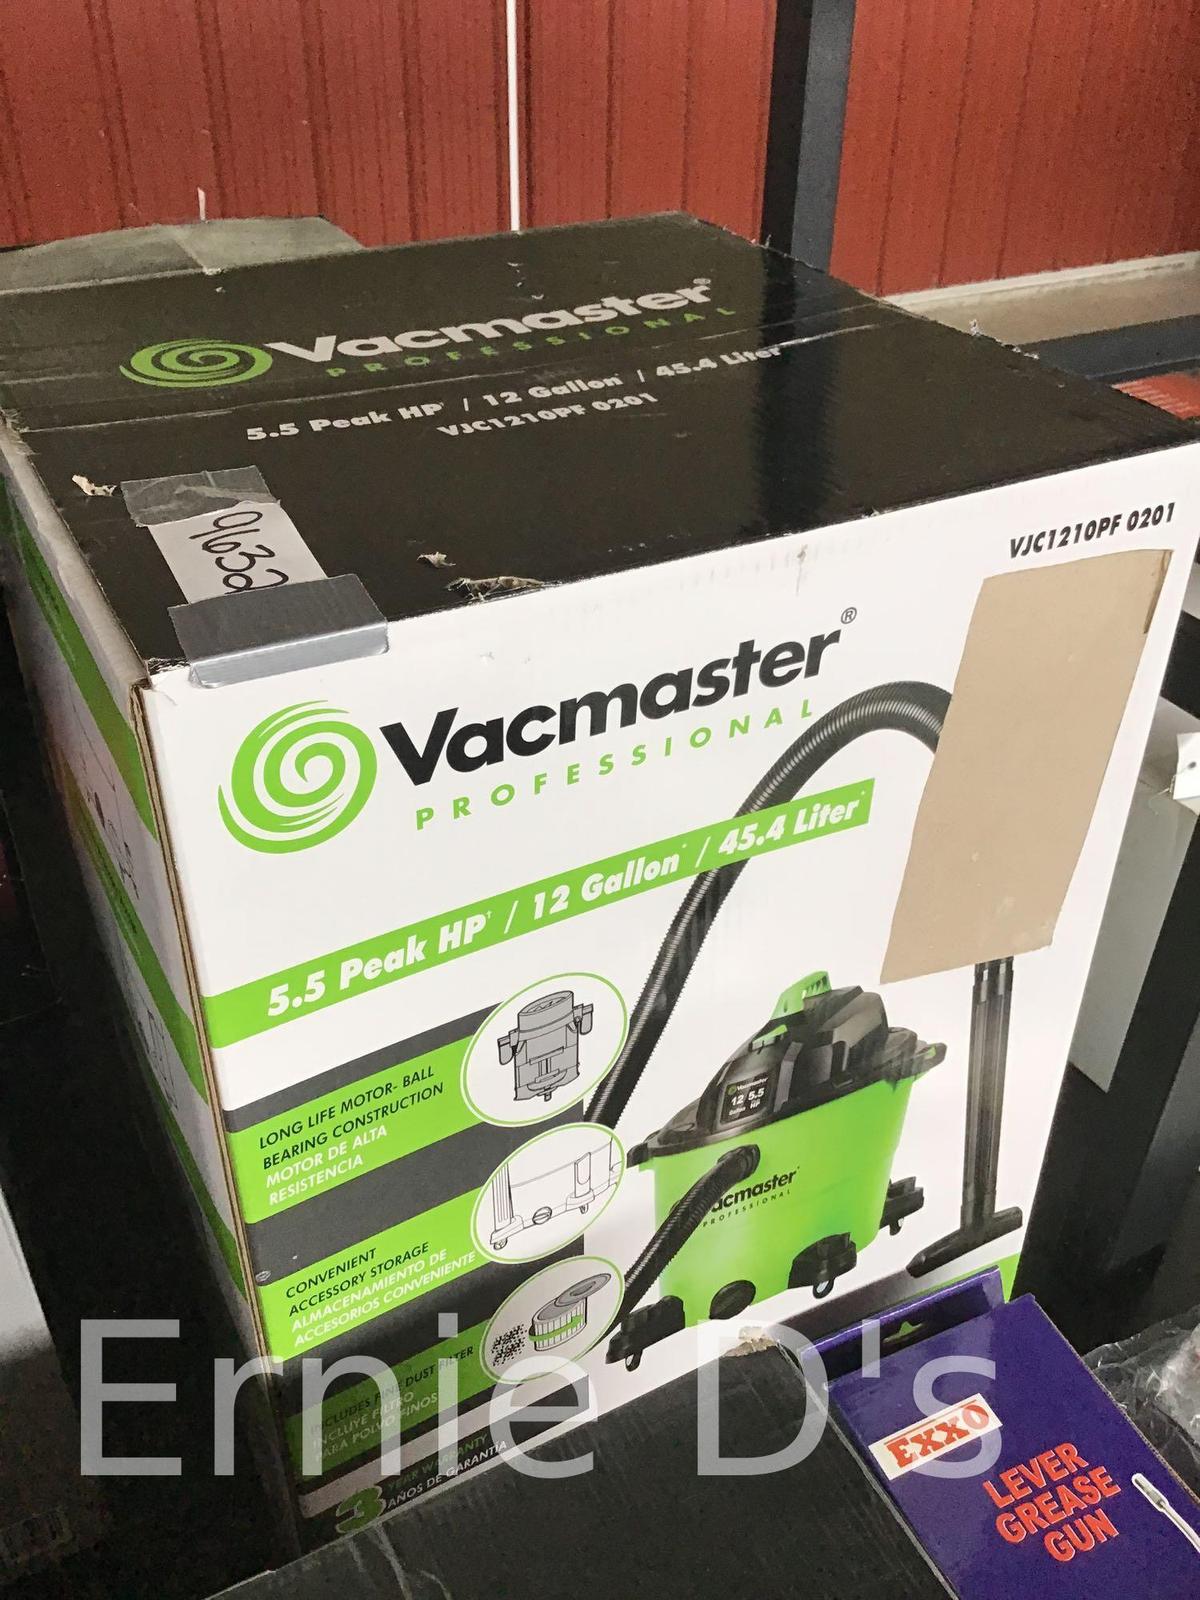 New/Unused Vacmaster Professional 5.5 HP, 12 Gallon Shop Vac